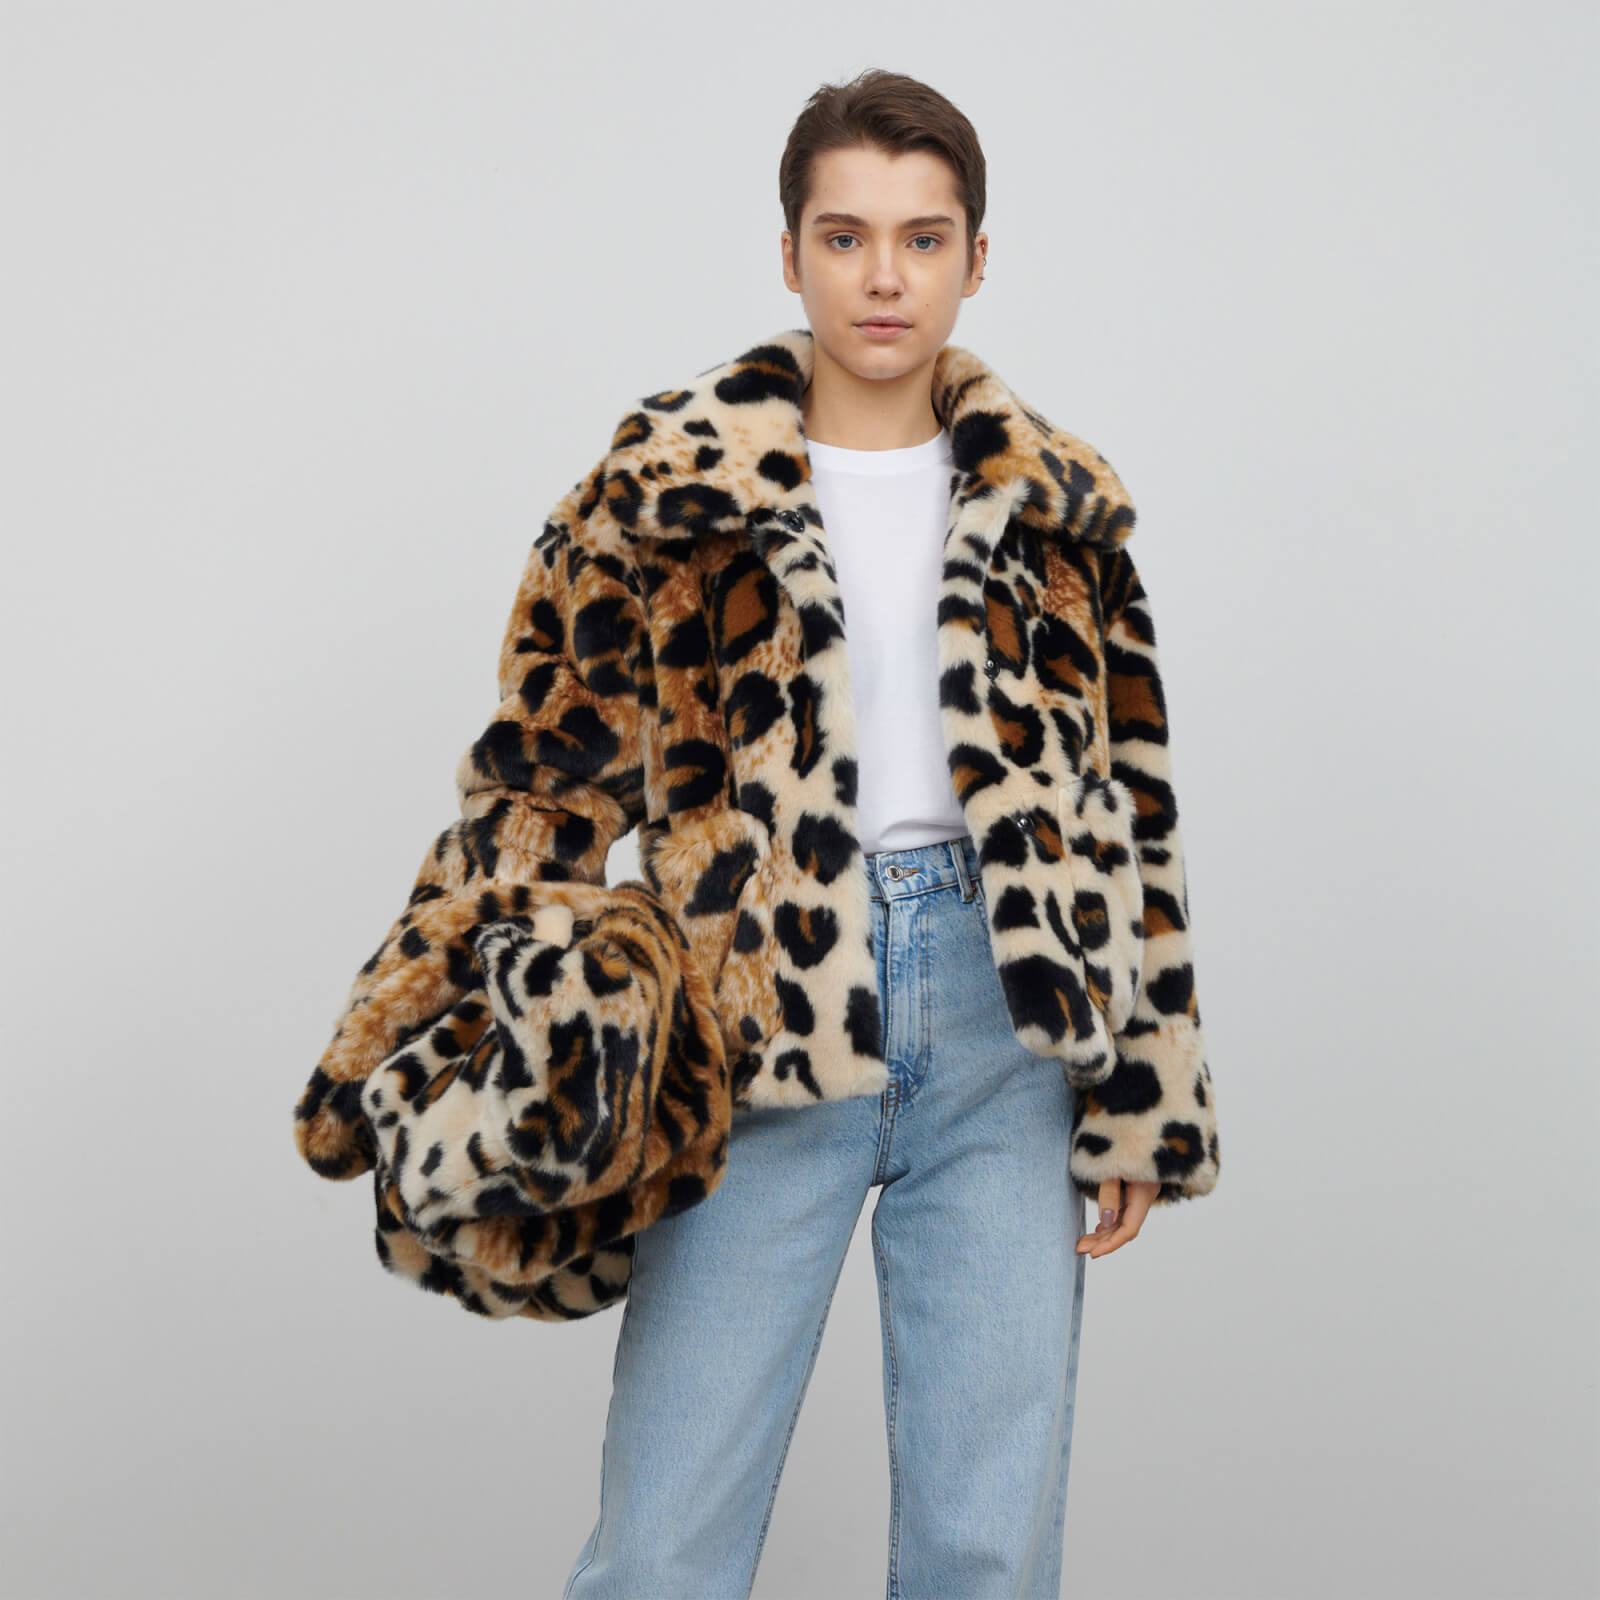 Jakke Traci Leopard-Print Faux Fur Coat - S